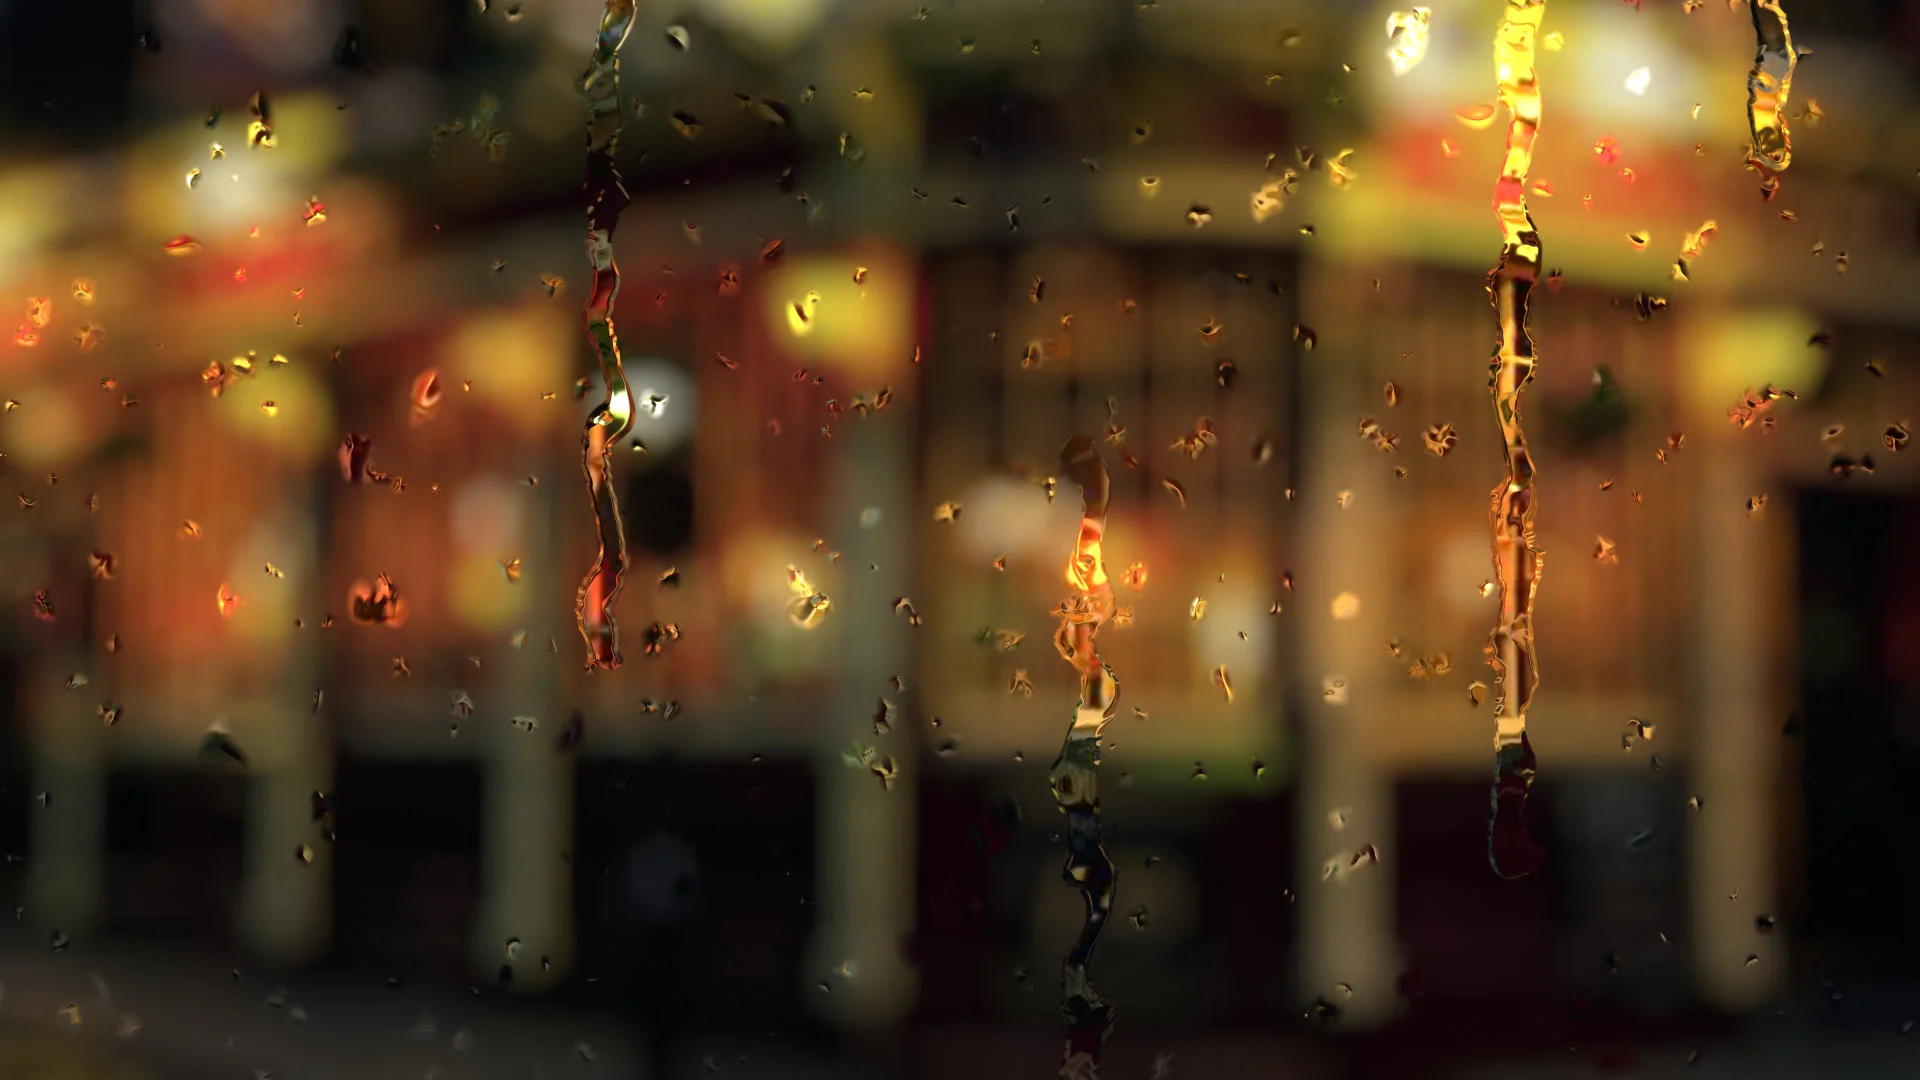 City Rain Drops on Window Animation | Stock Video | Pond5